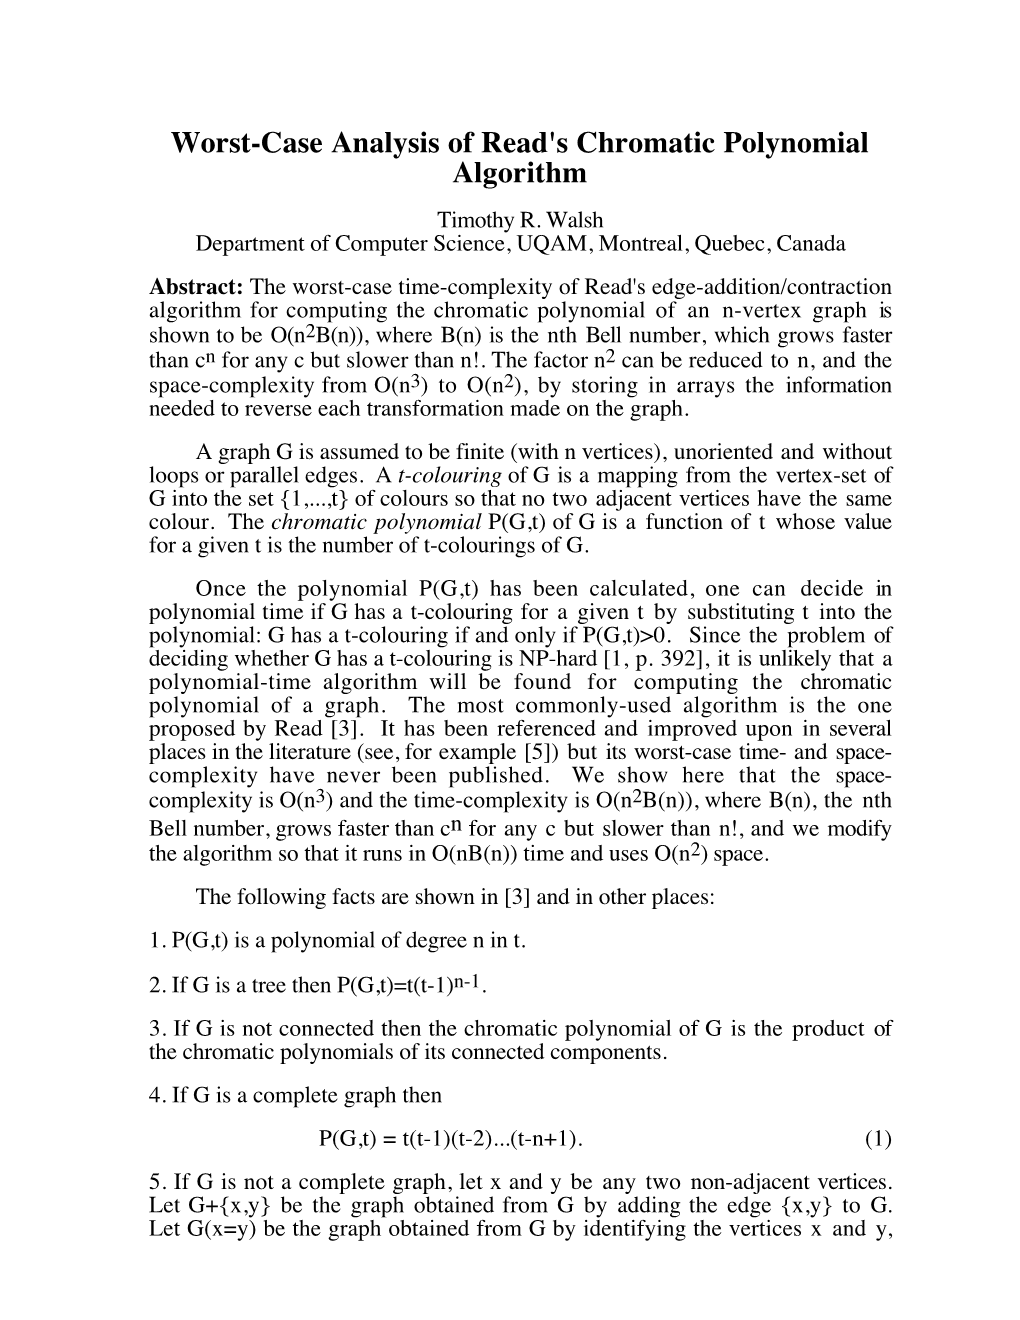 Worst-Case Analysis of Read's Chromatic Polynomial Algorithm Timothy R